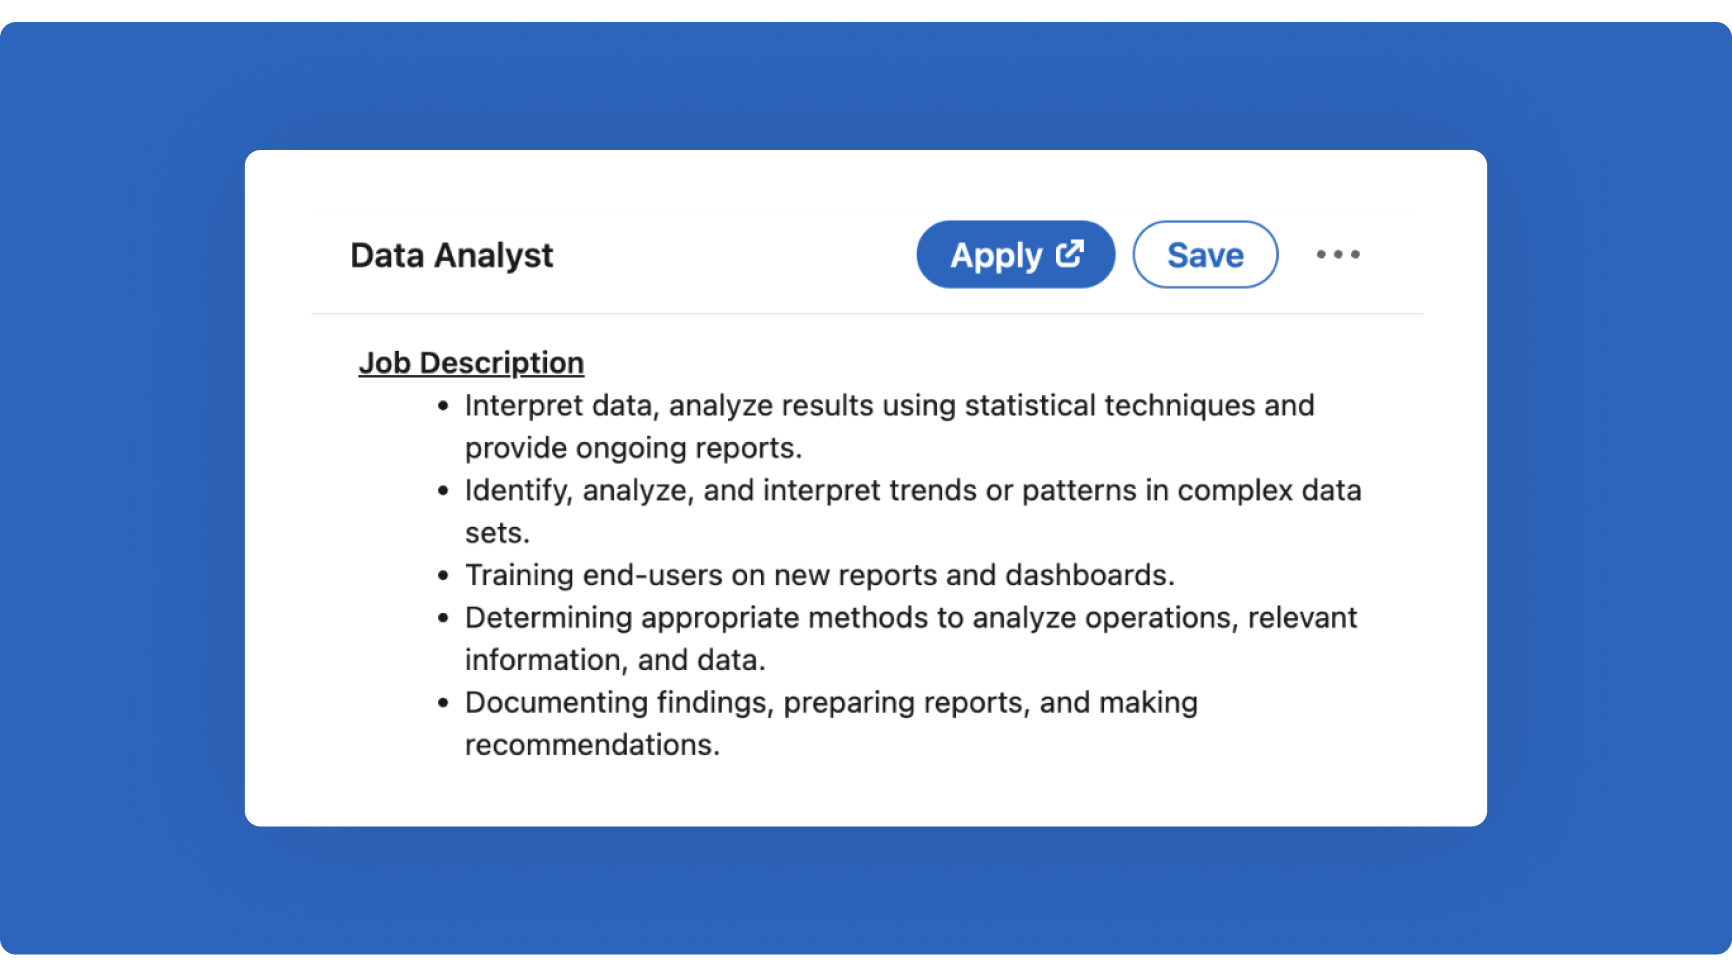 Data Analyst job description